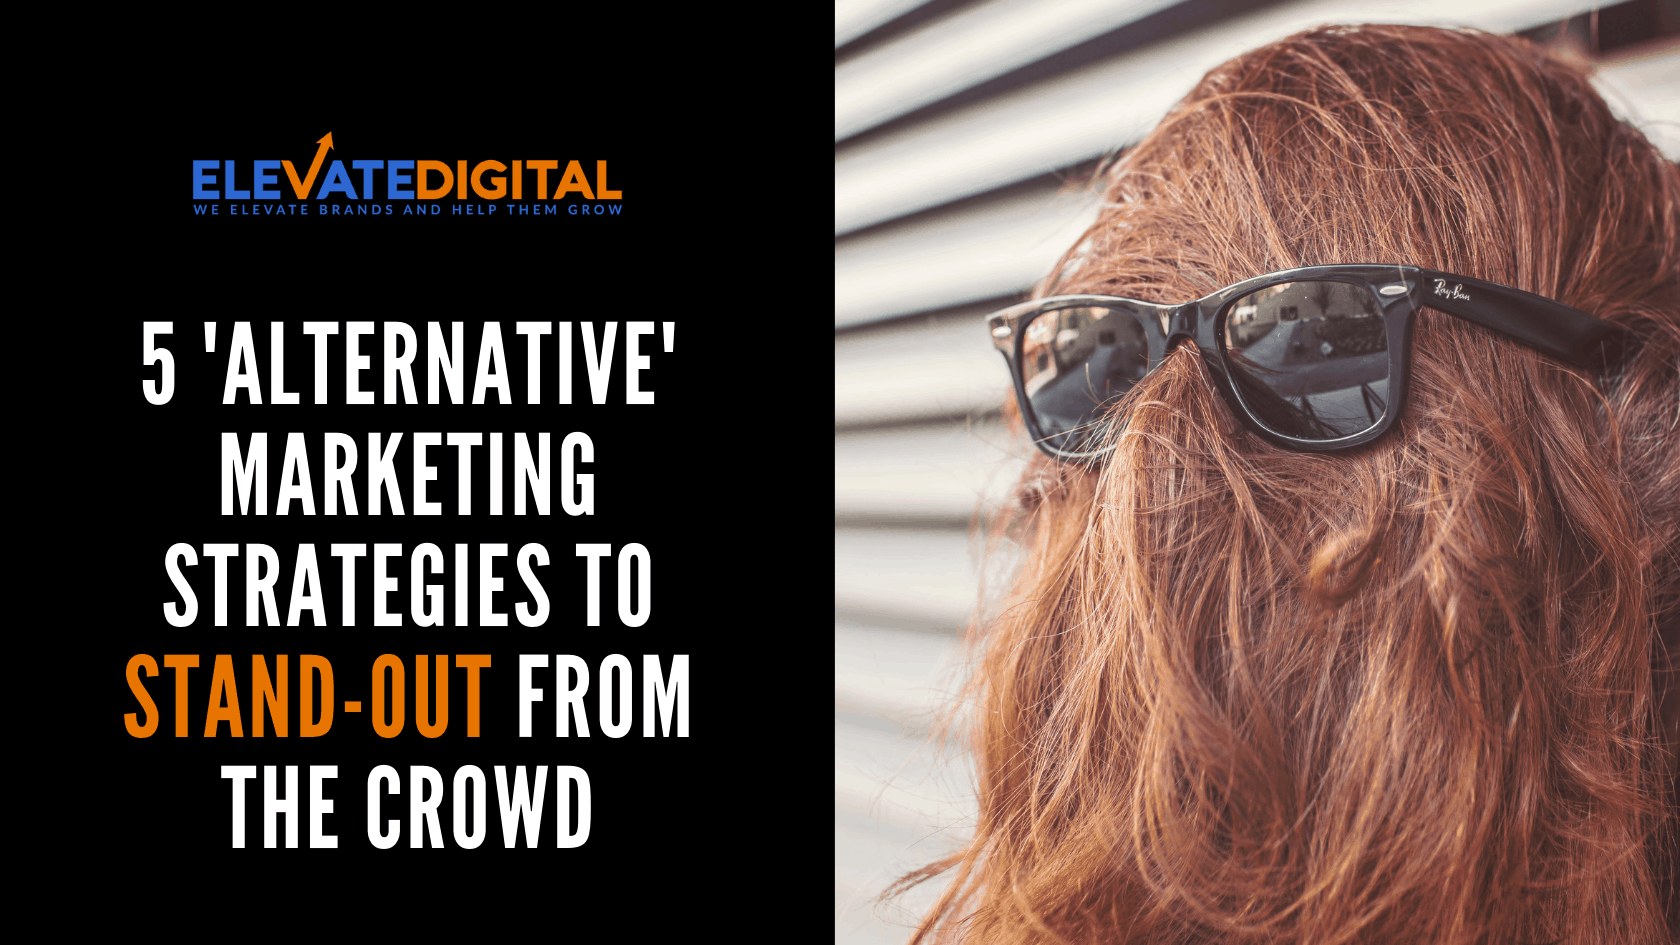 5 Alternative Marketing Strategies - Elevate Digital blog post image, chewbacca face